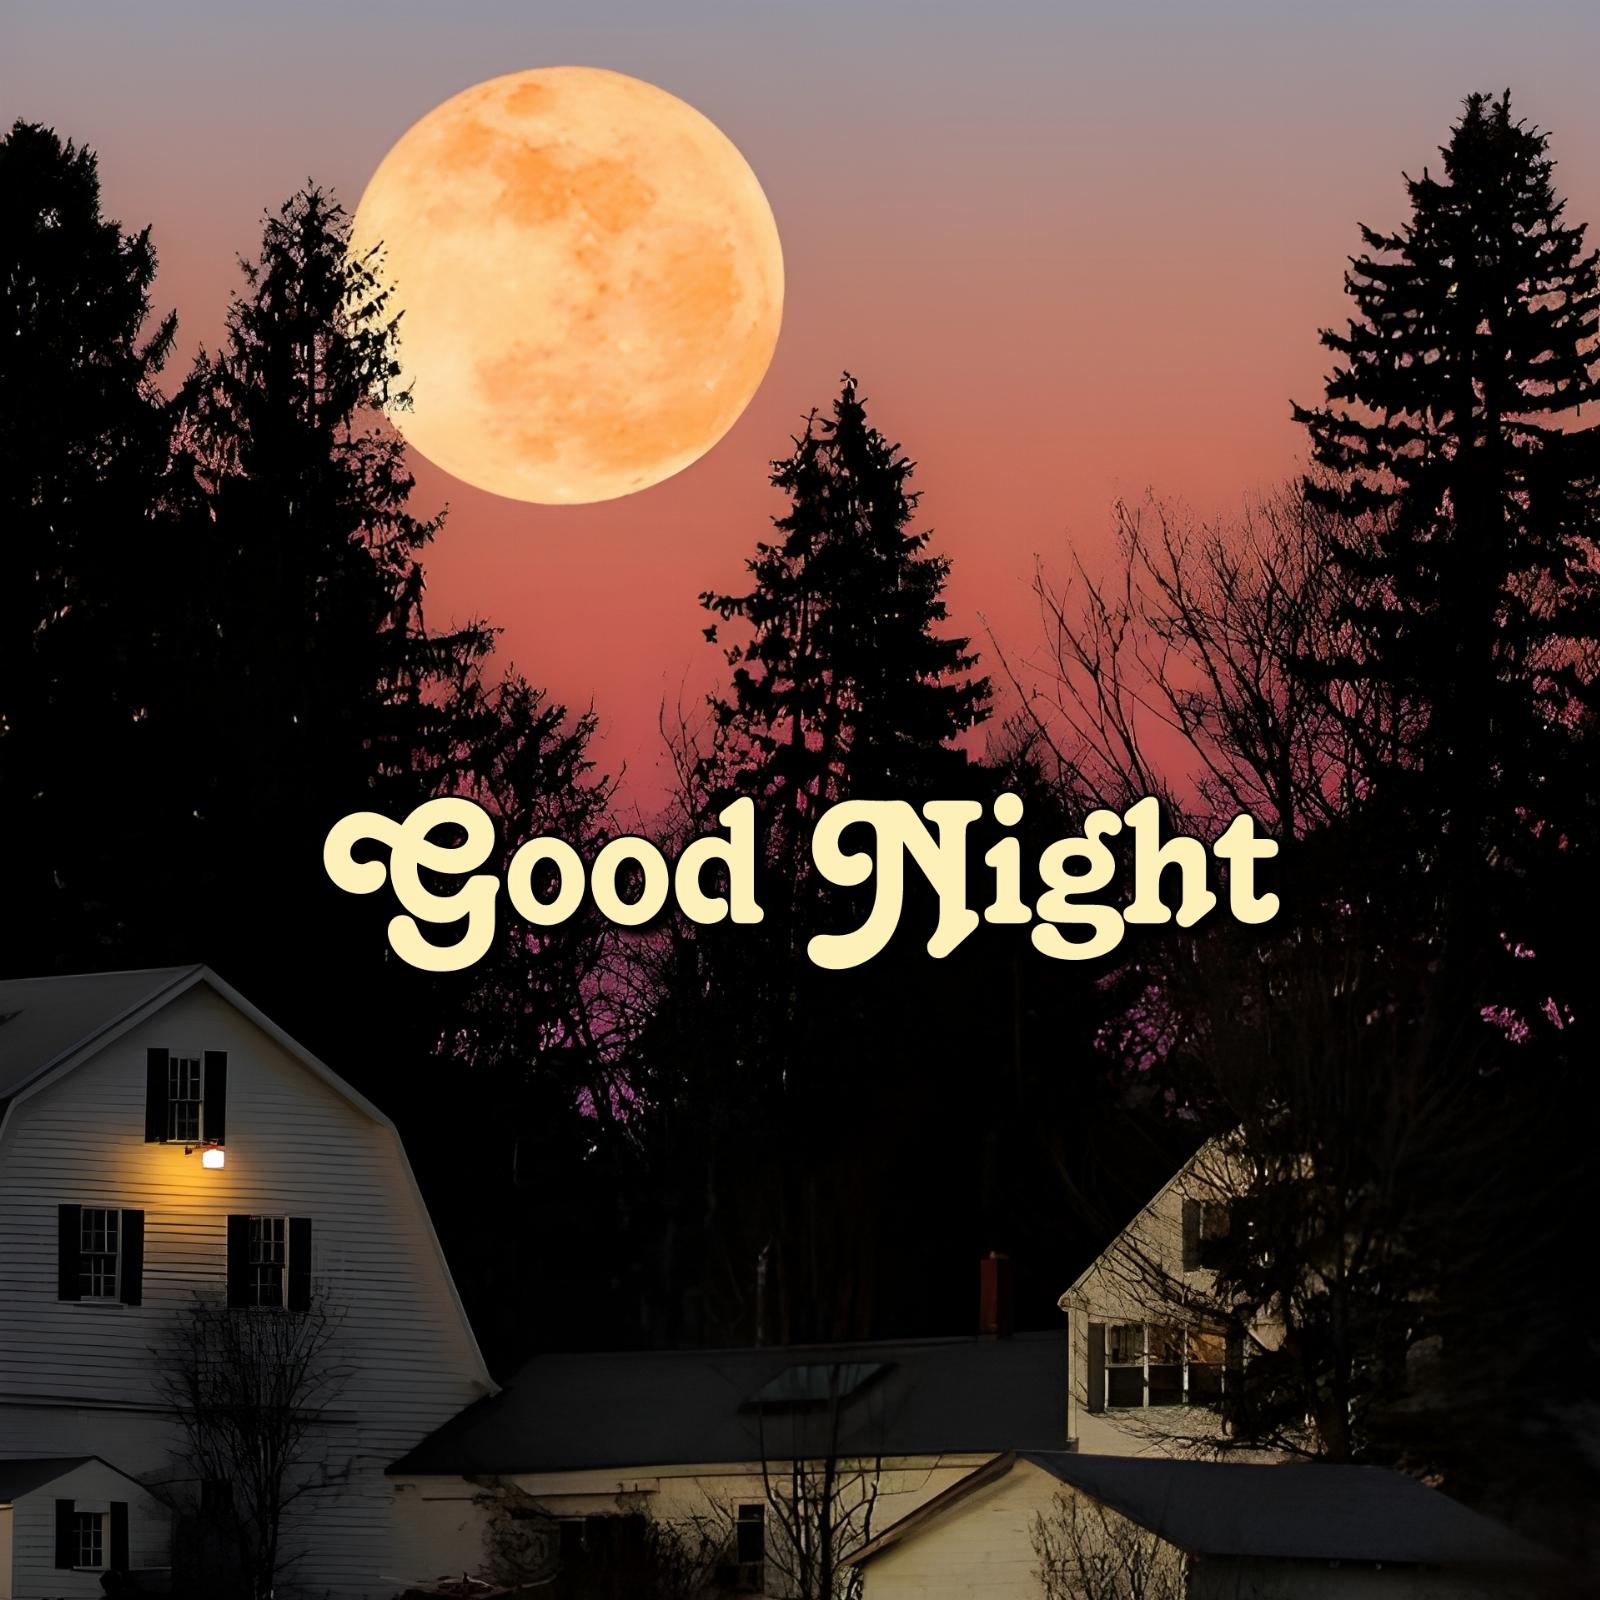 Good Night Full Moon Images